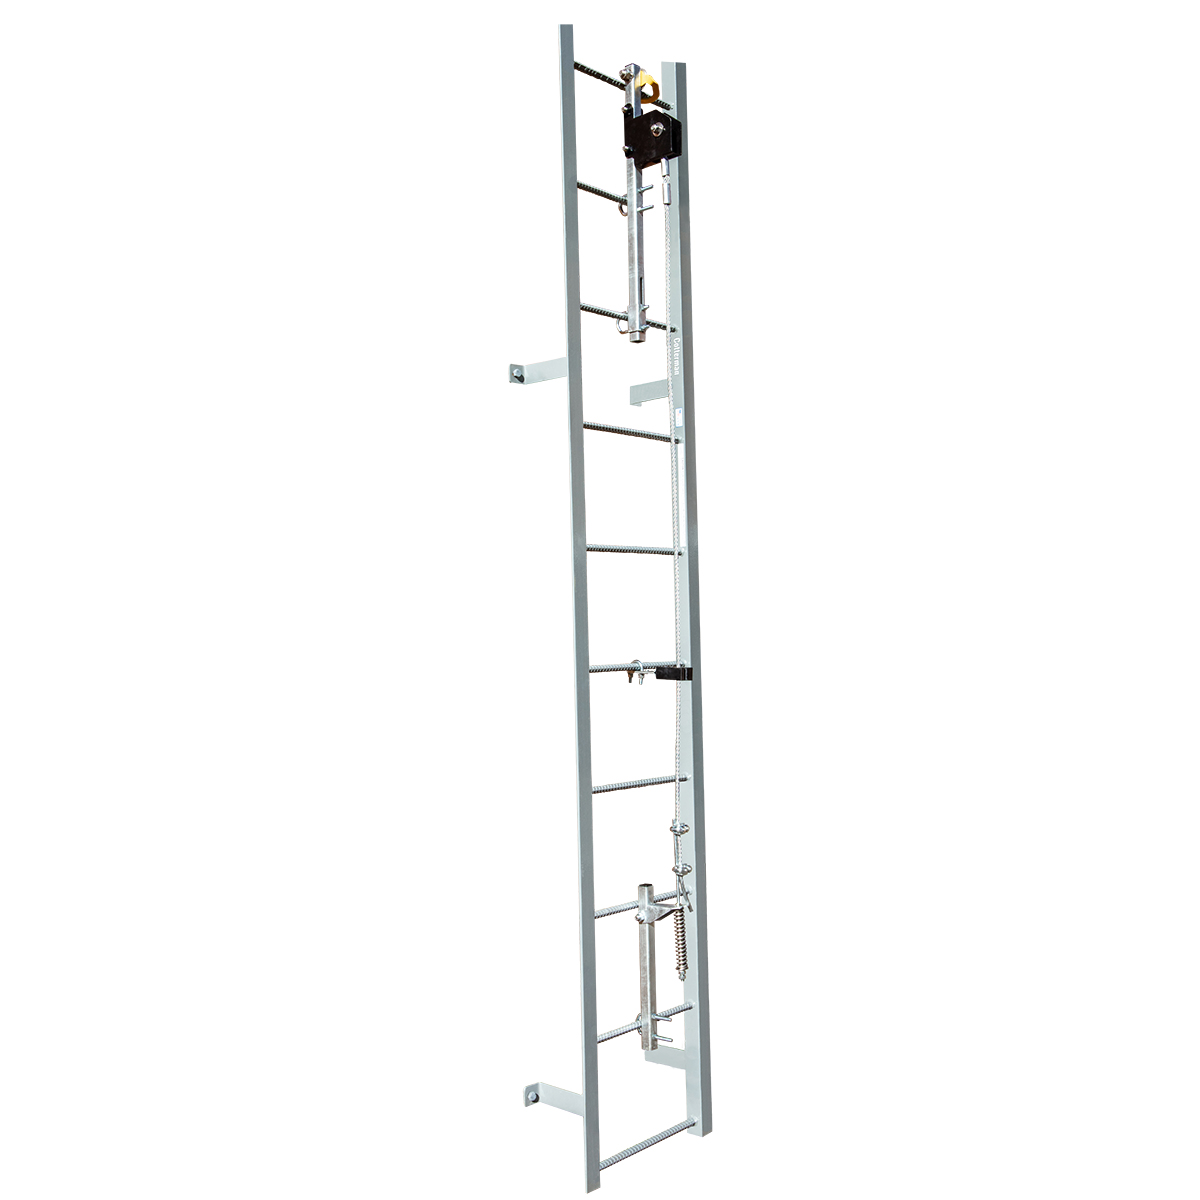 SafeWaze 50' VLL Cable Ladder System, 2-person Complete Kit